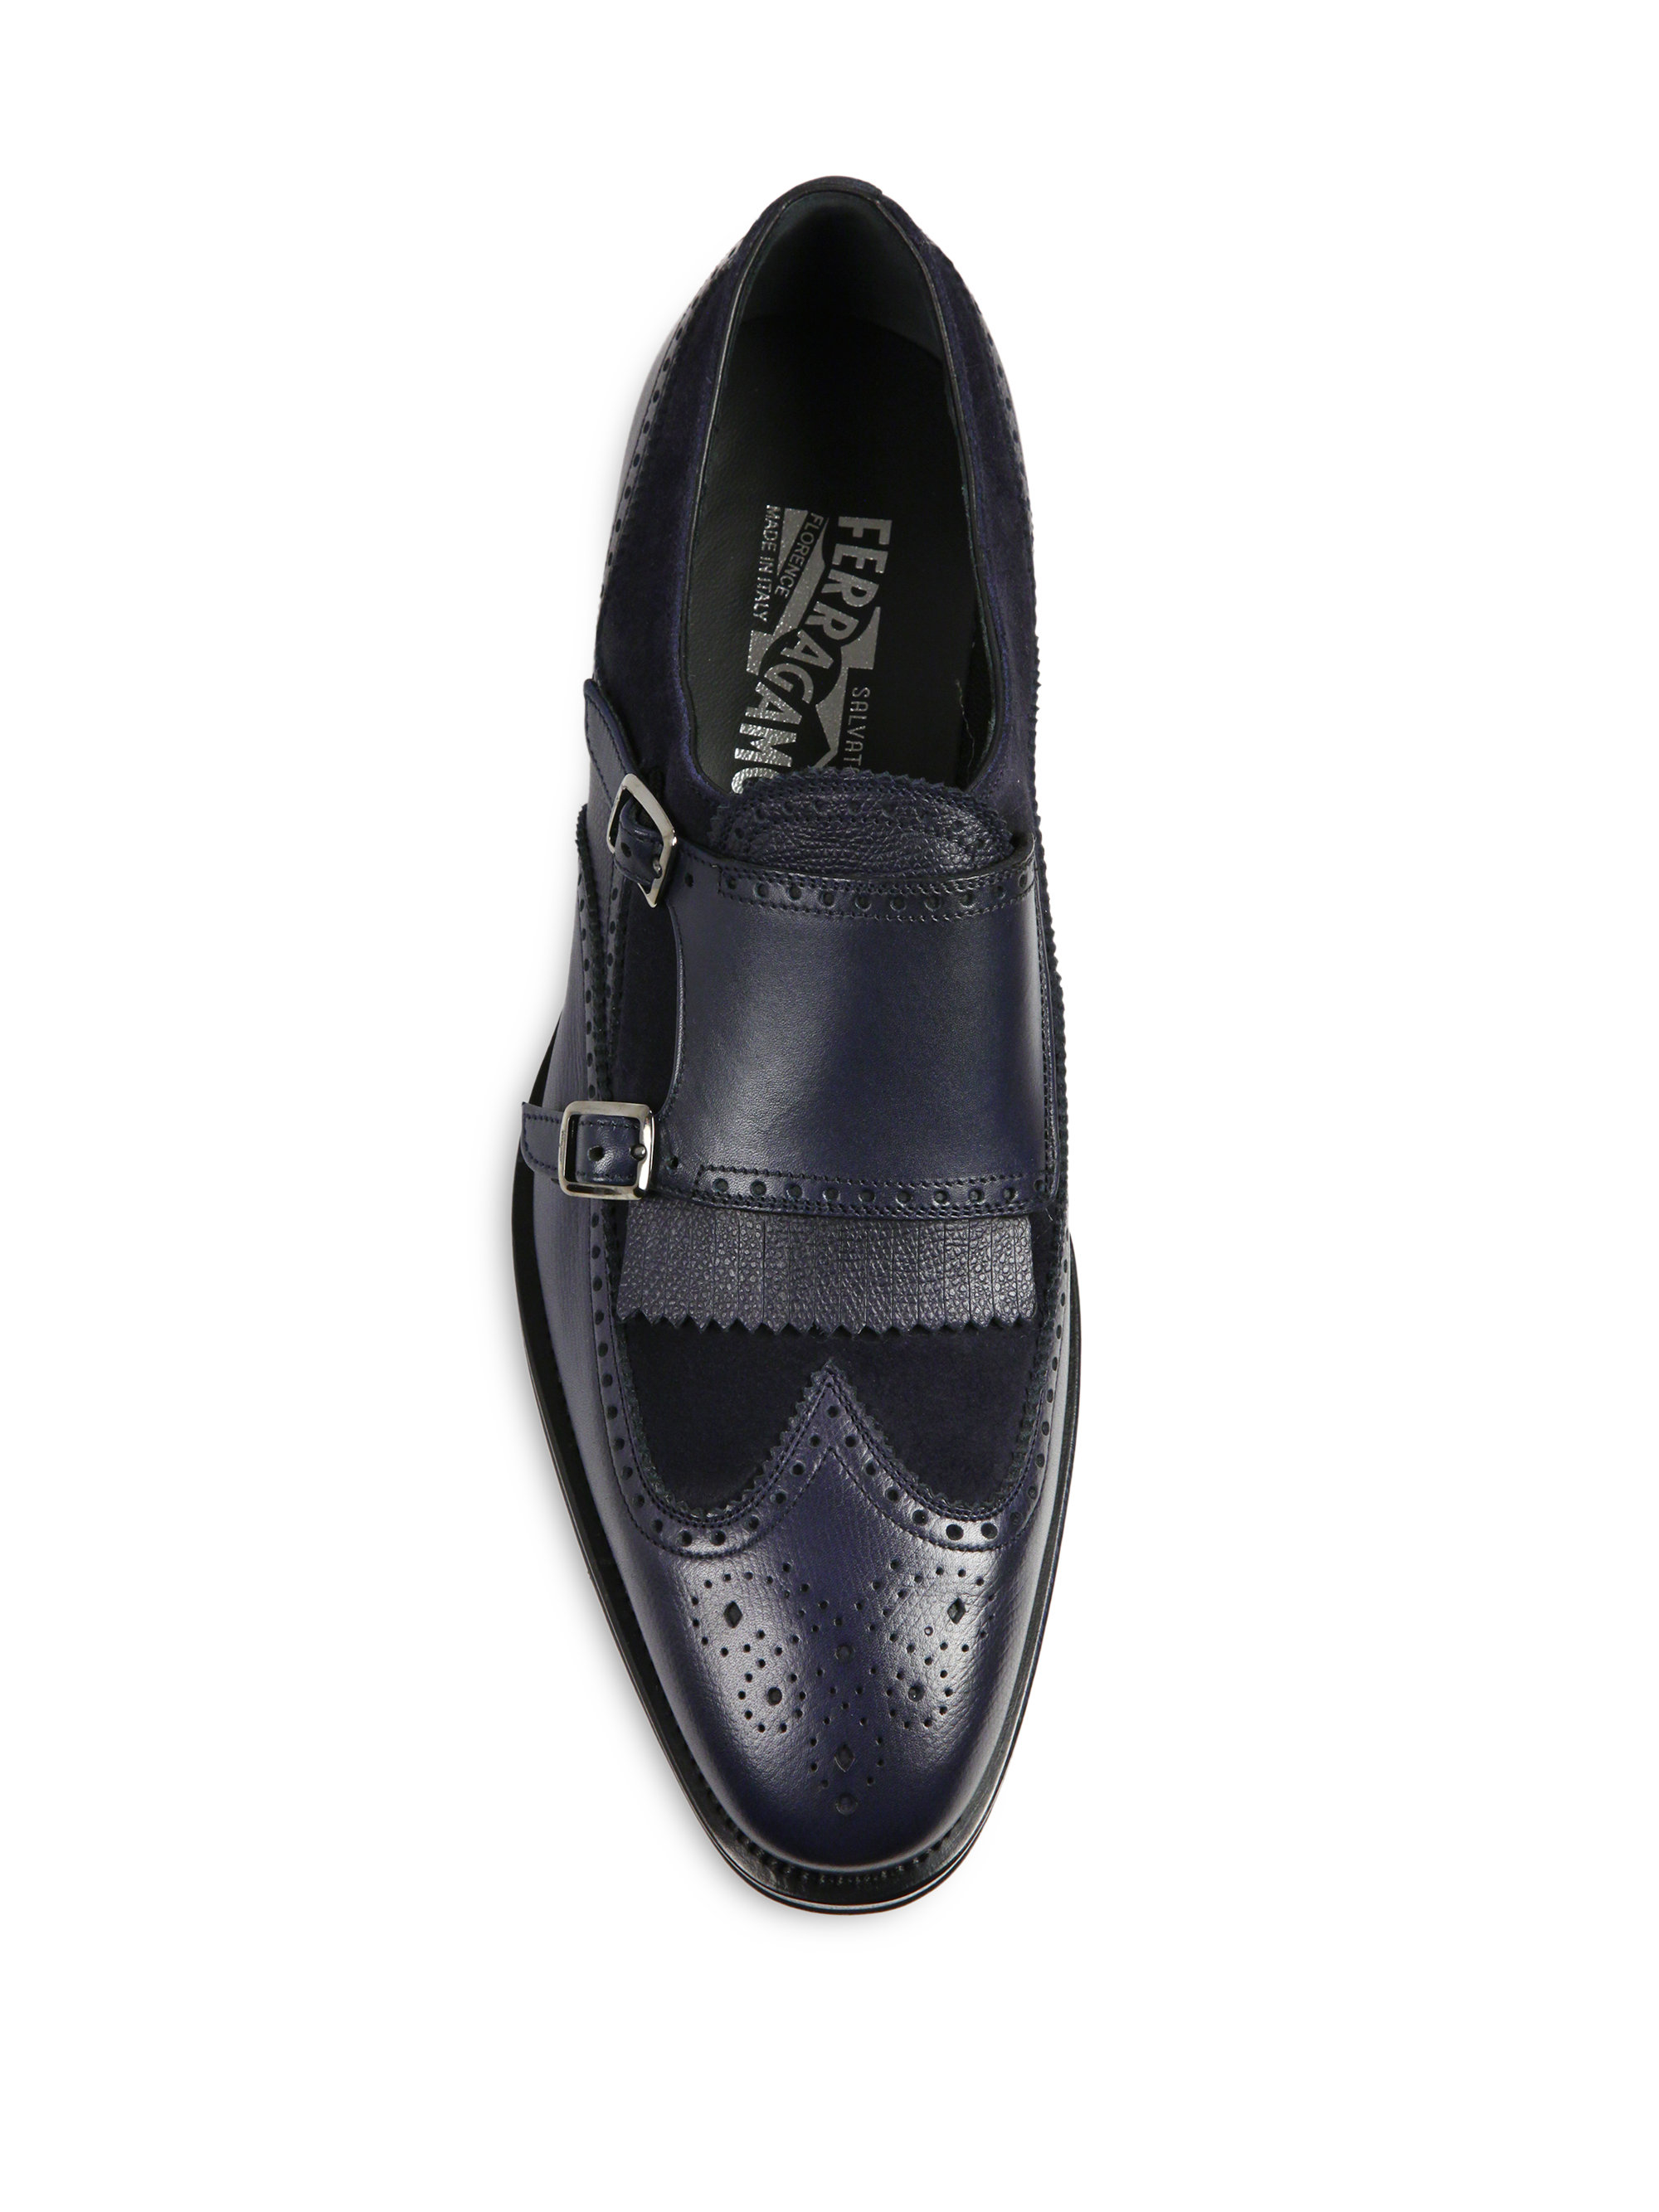 Ferragamo Marlin Leather Wingtip Double Monk-strap Shoes in Navy (Blue ...